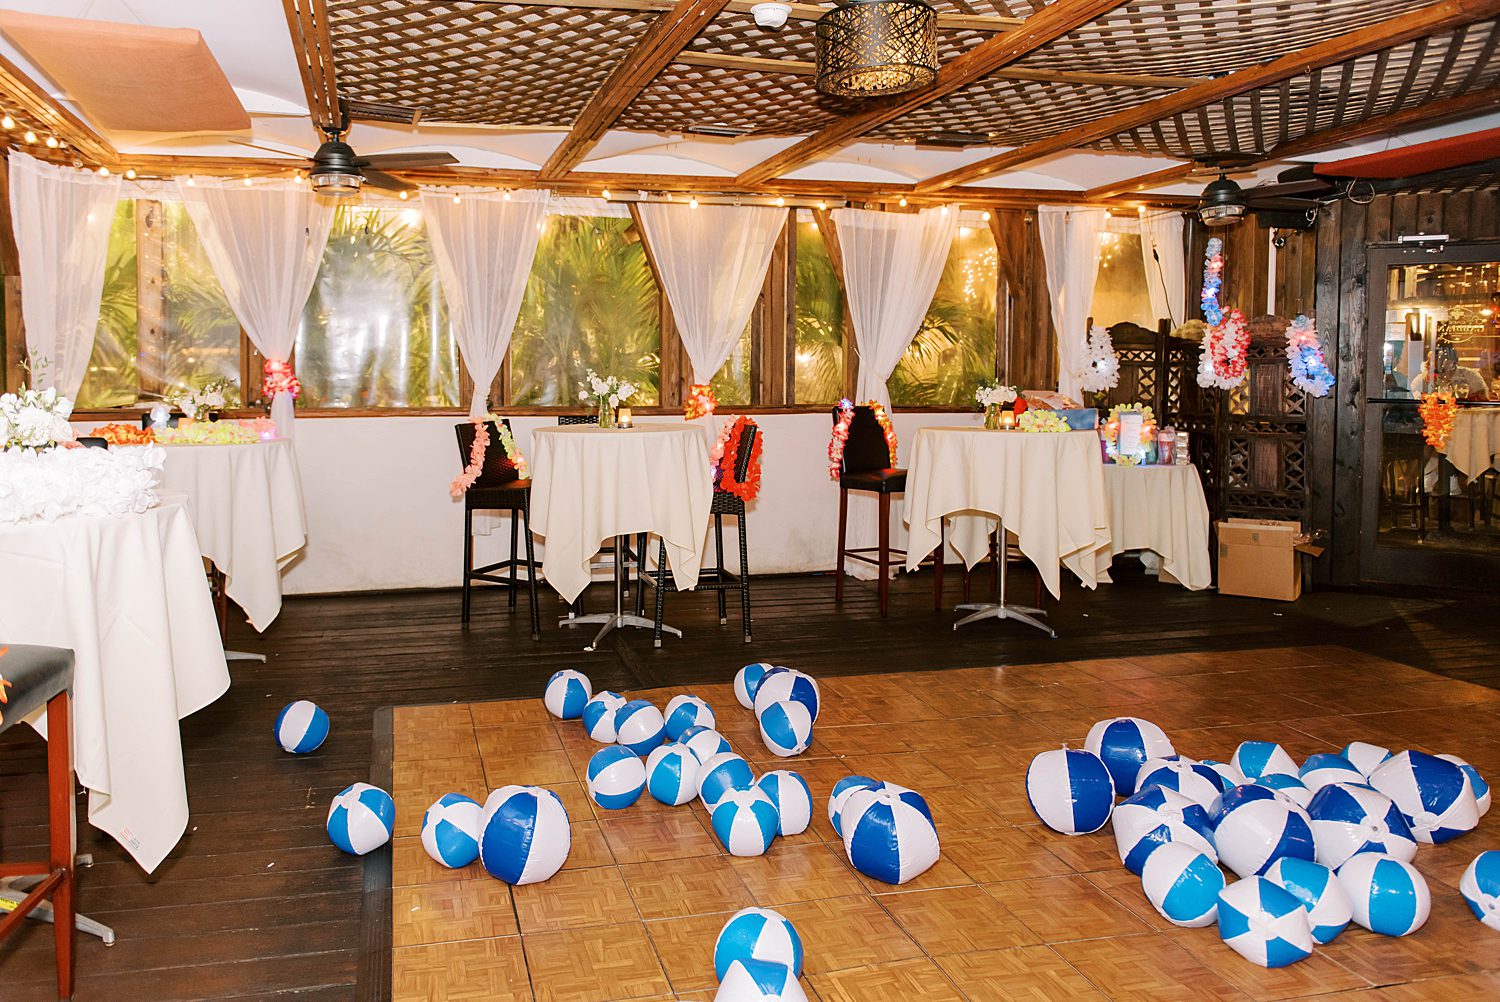 Cafe Gabbiano wedding reception dance floor with blue beach balls